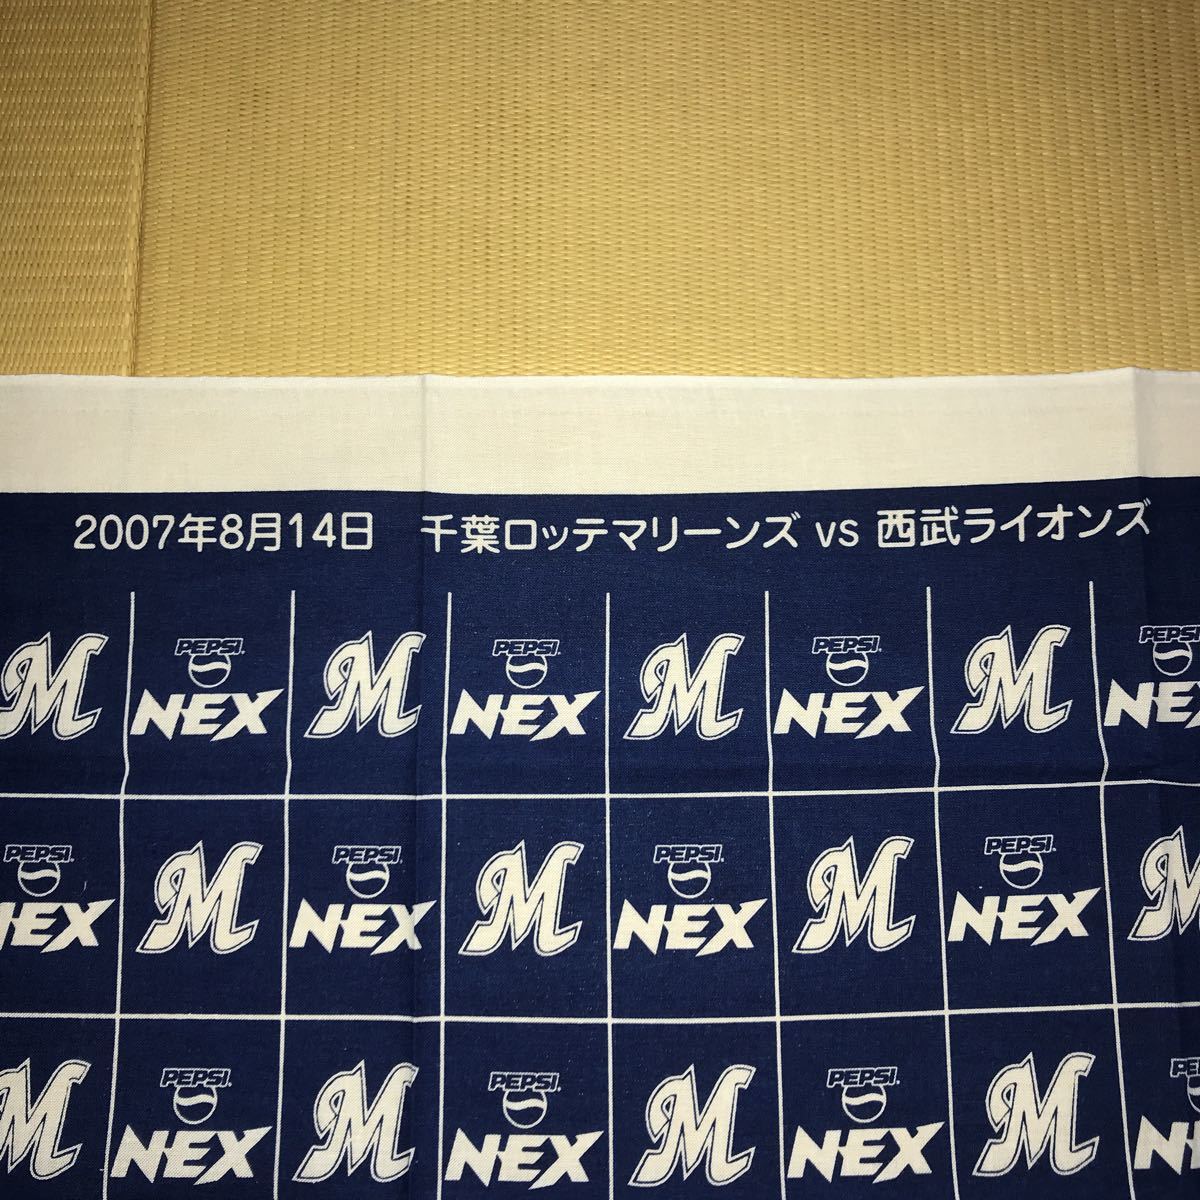  Pepsi NEX Chiba Lotte Marines стикер & незначительный полотенце 